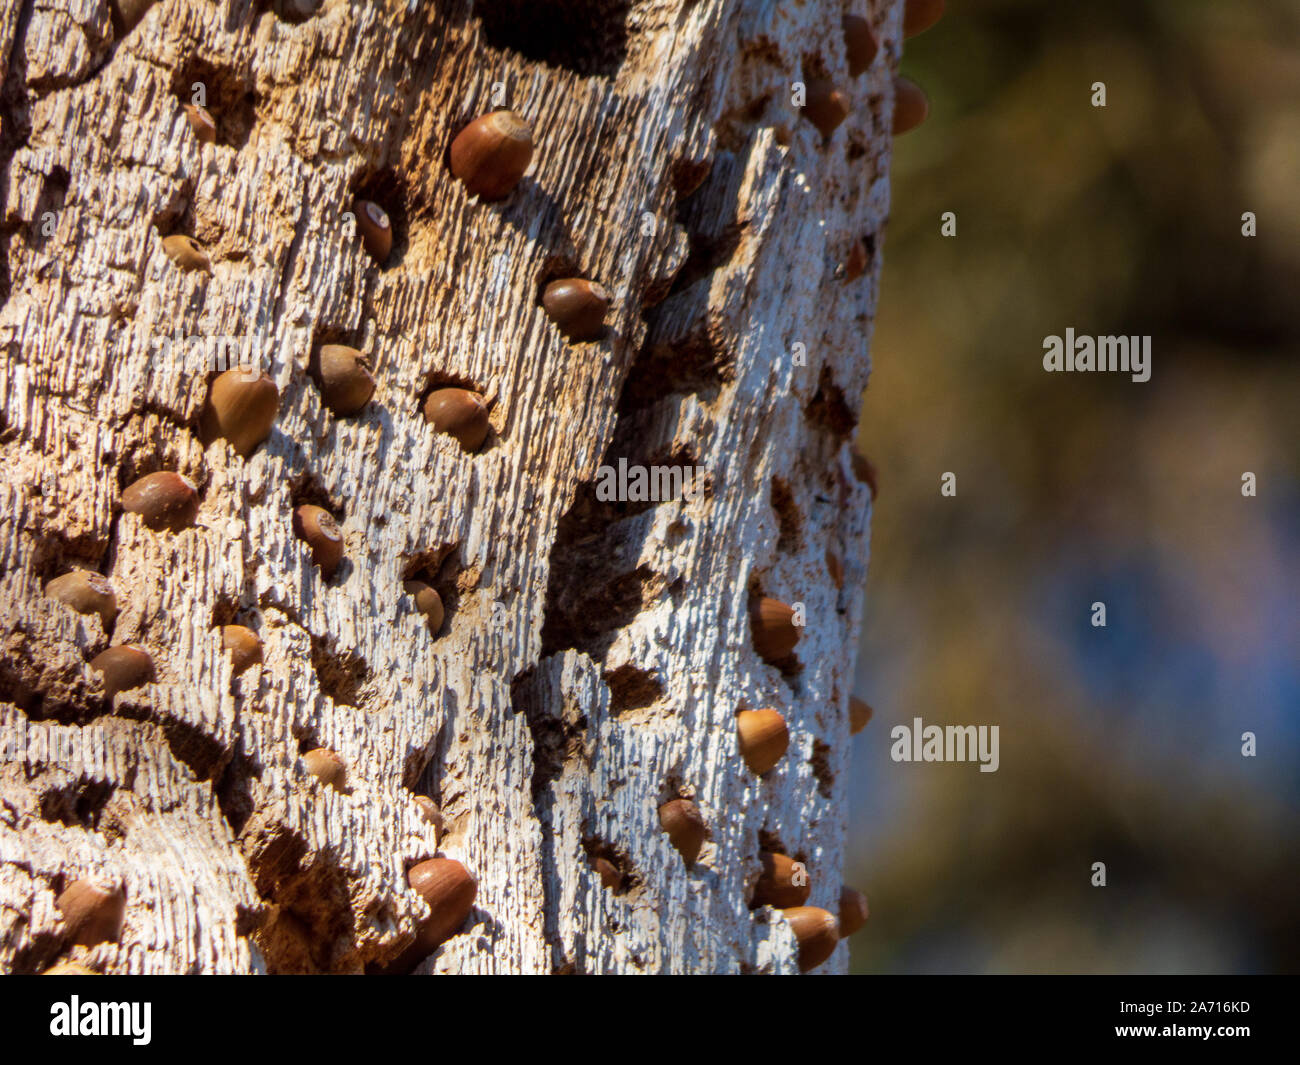 Acorn woodpecker acorn Granary stash in dead tree Stock Photo